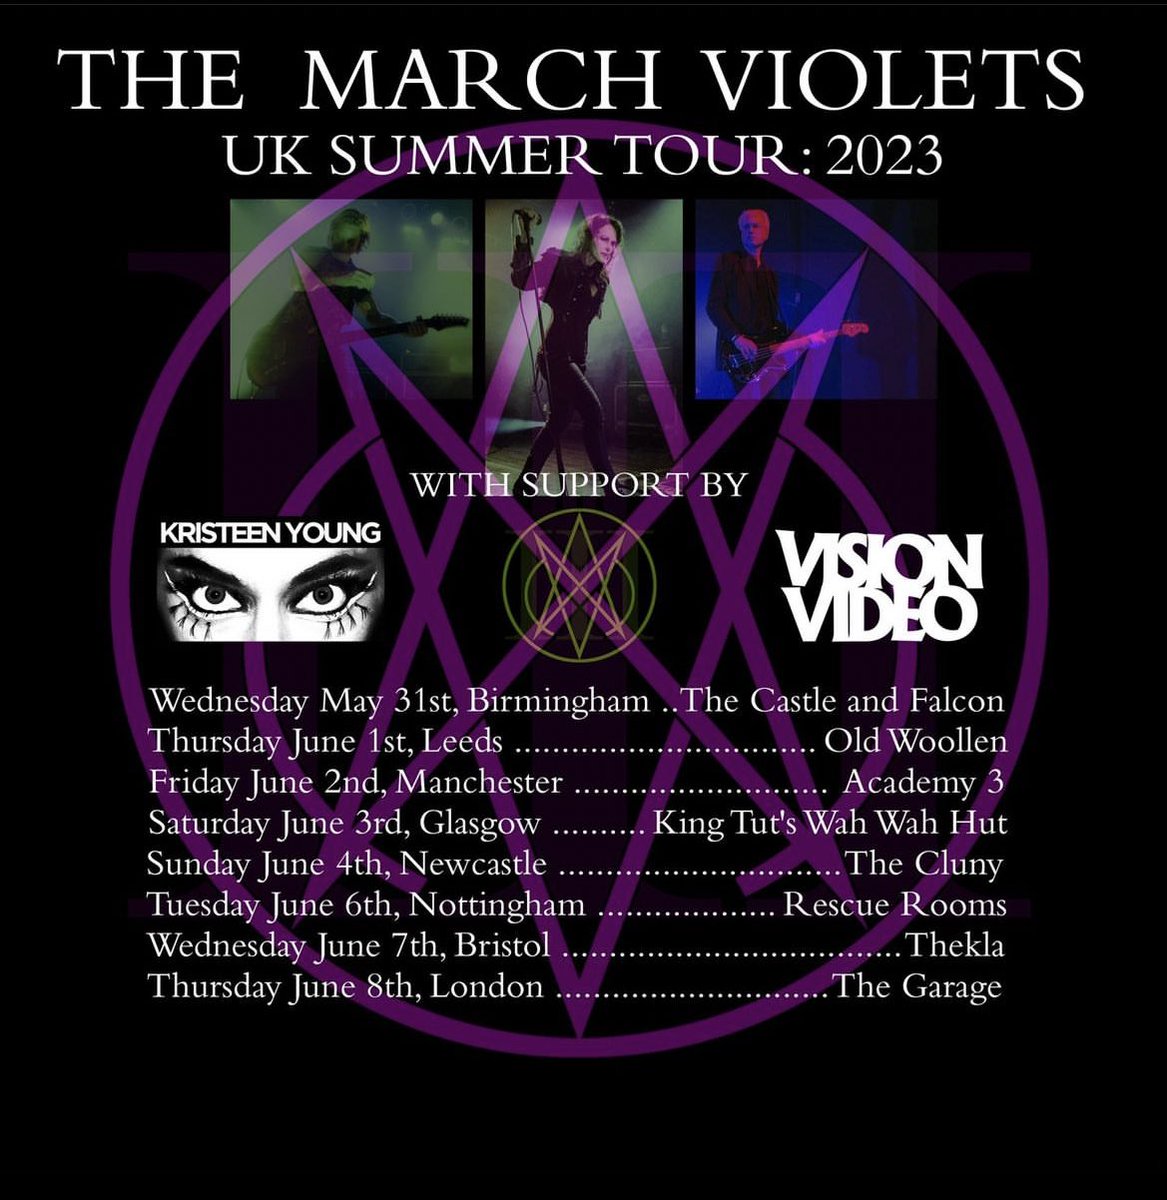 #MarchViolets touring this summer >> marchvioletsband.com/tour-dates/ 

#gothicrock #gothcommunity #gothmusic #gothchat #gothrock #gothbands